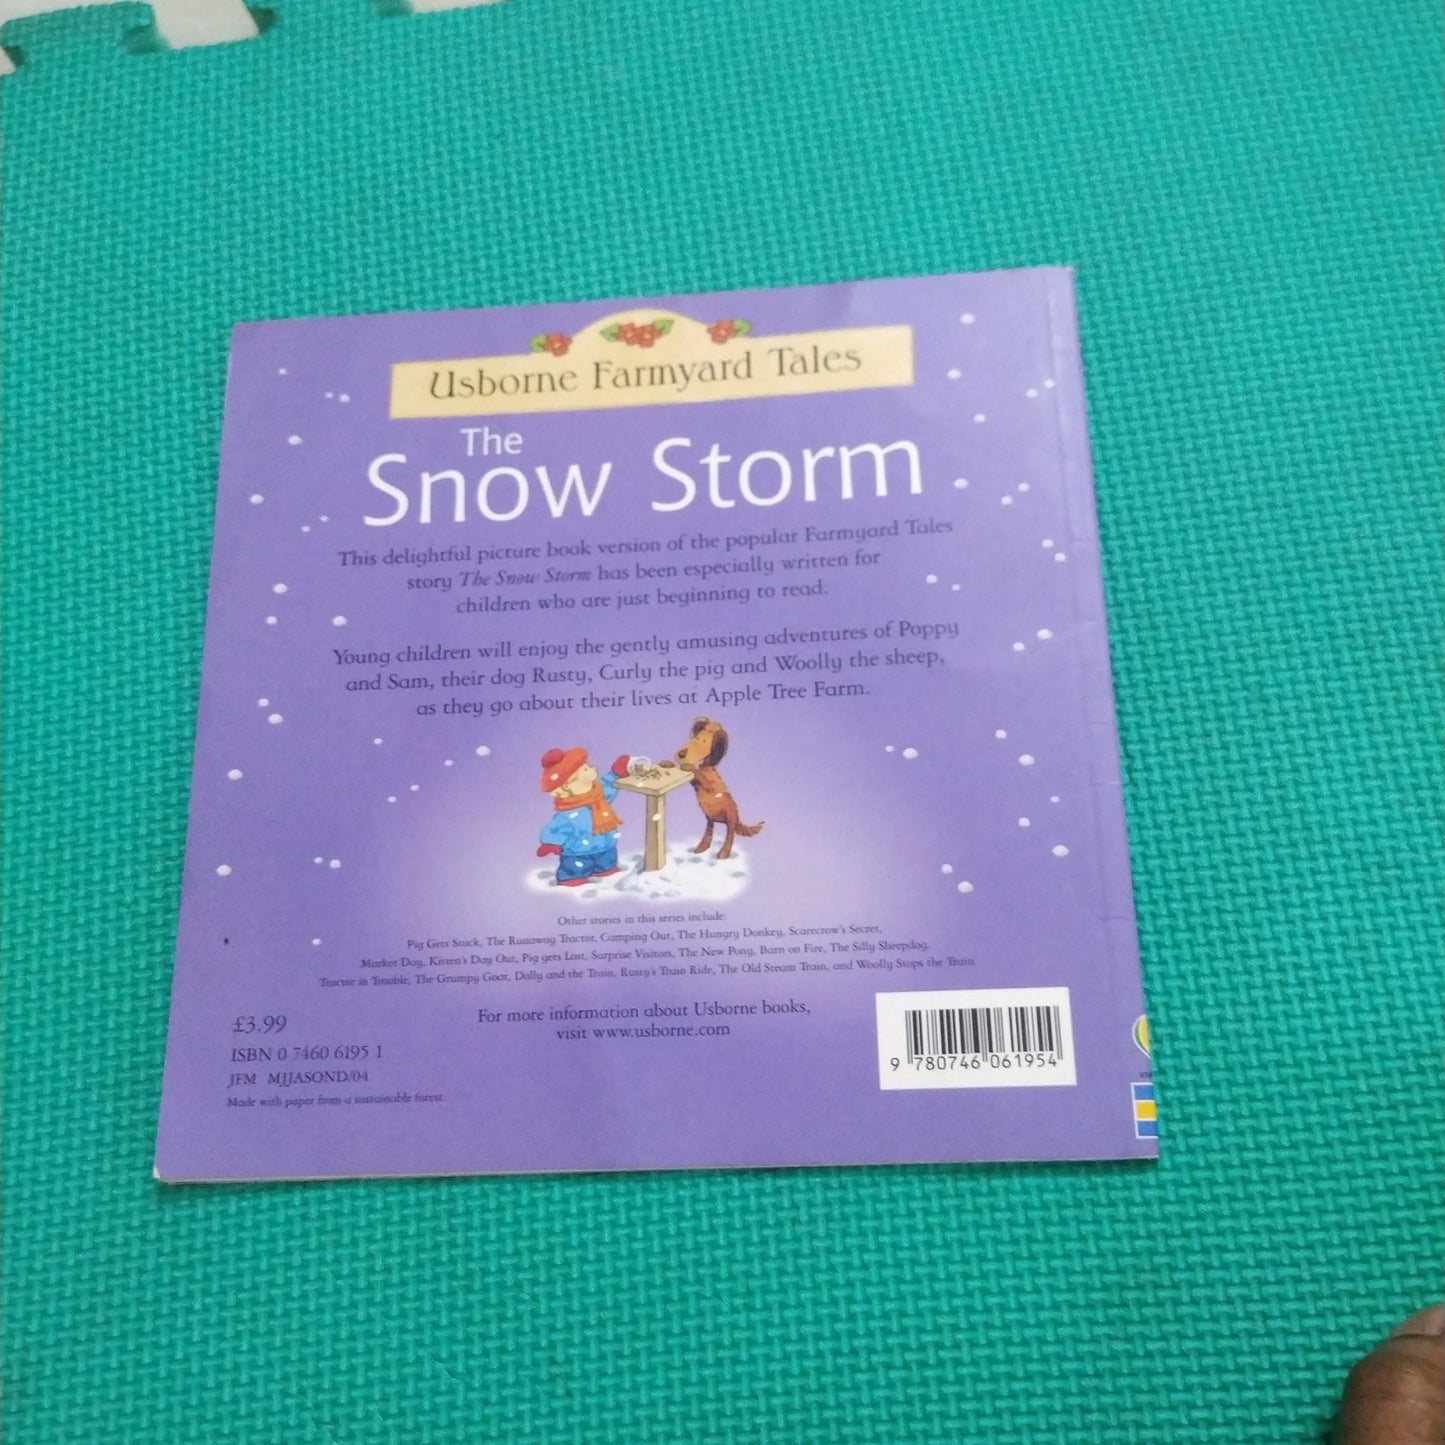 The Snow Storm